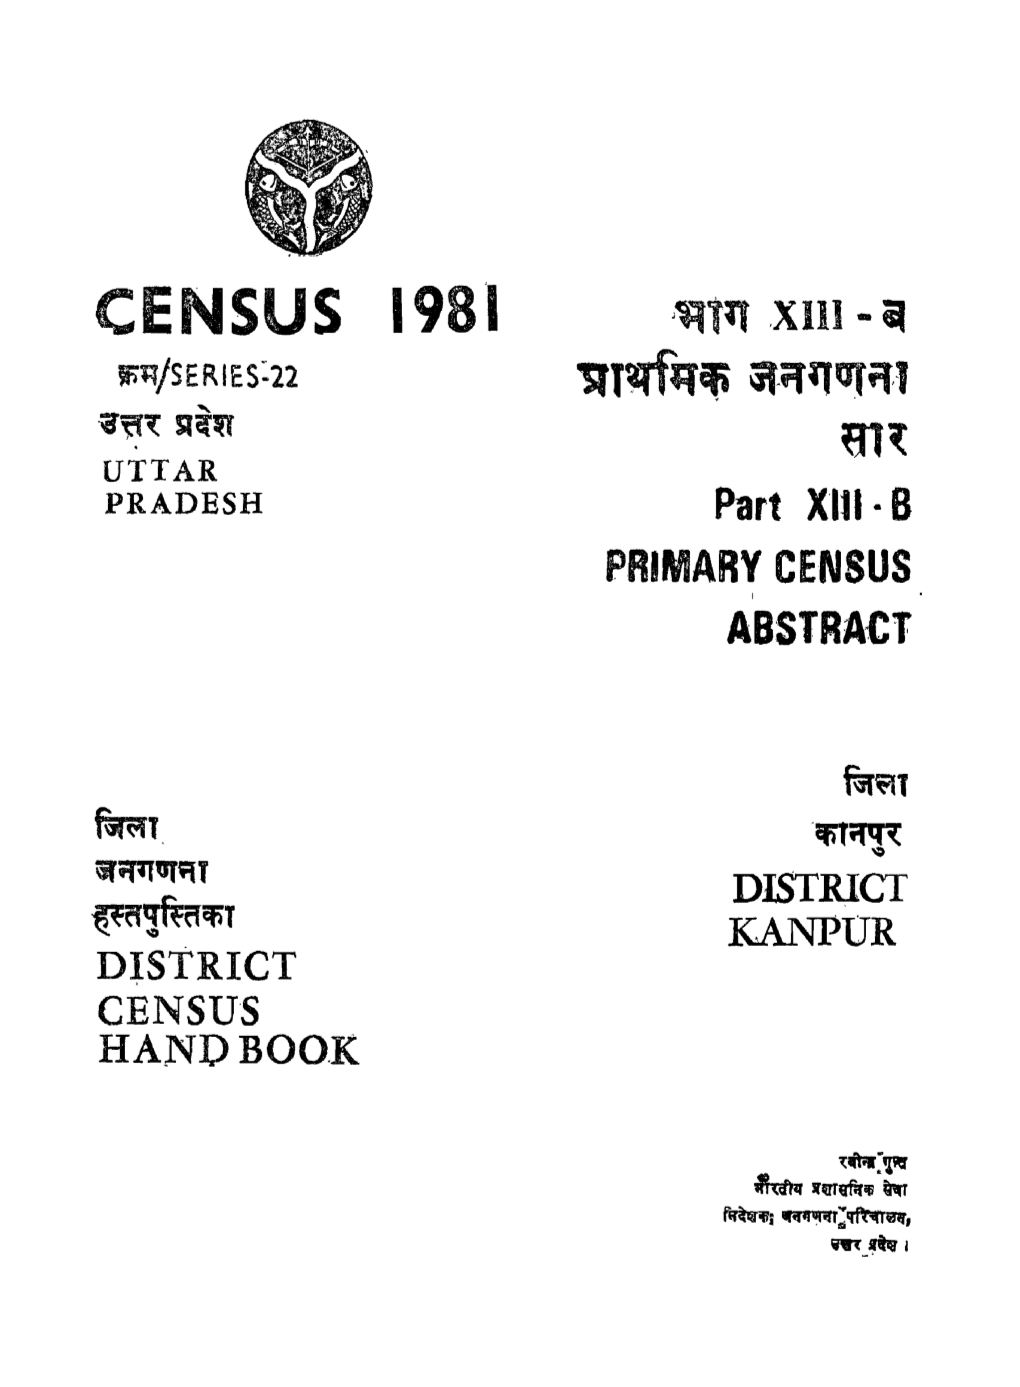 District Census Handbook, Kanpur, Part XIII-B, Series-22, Uttar Pradesh